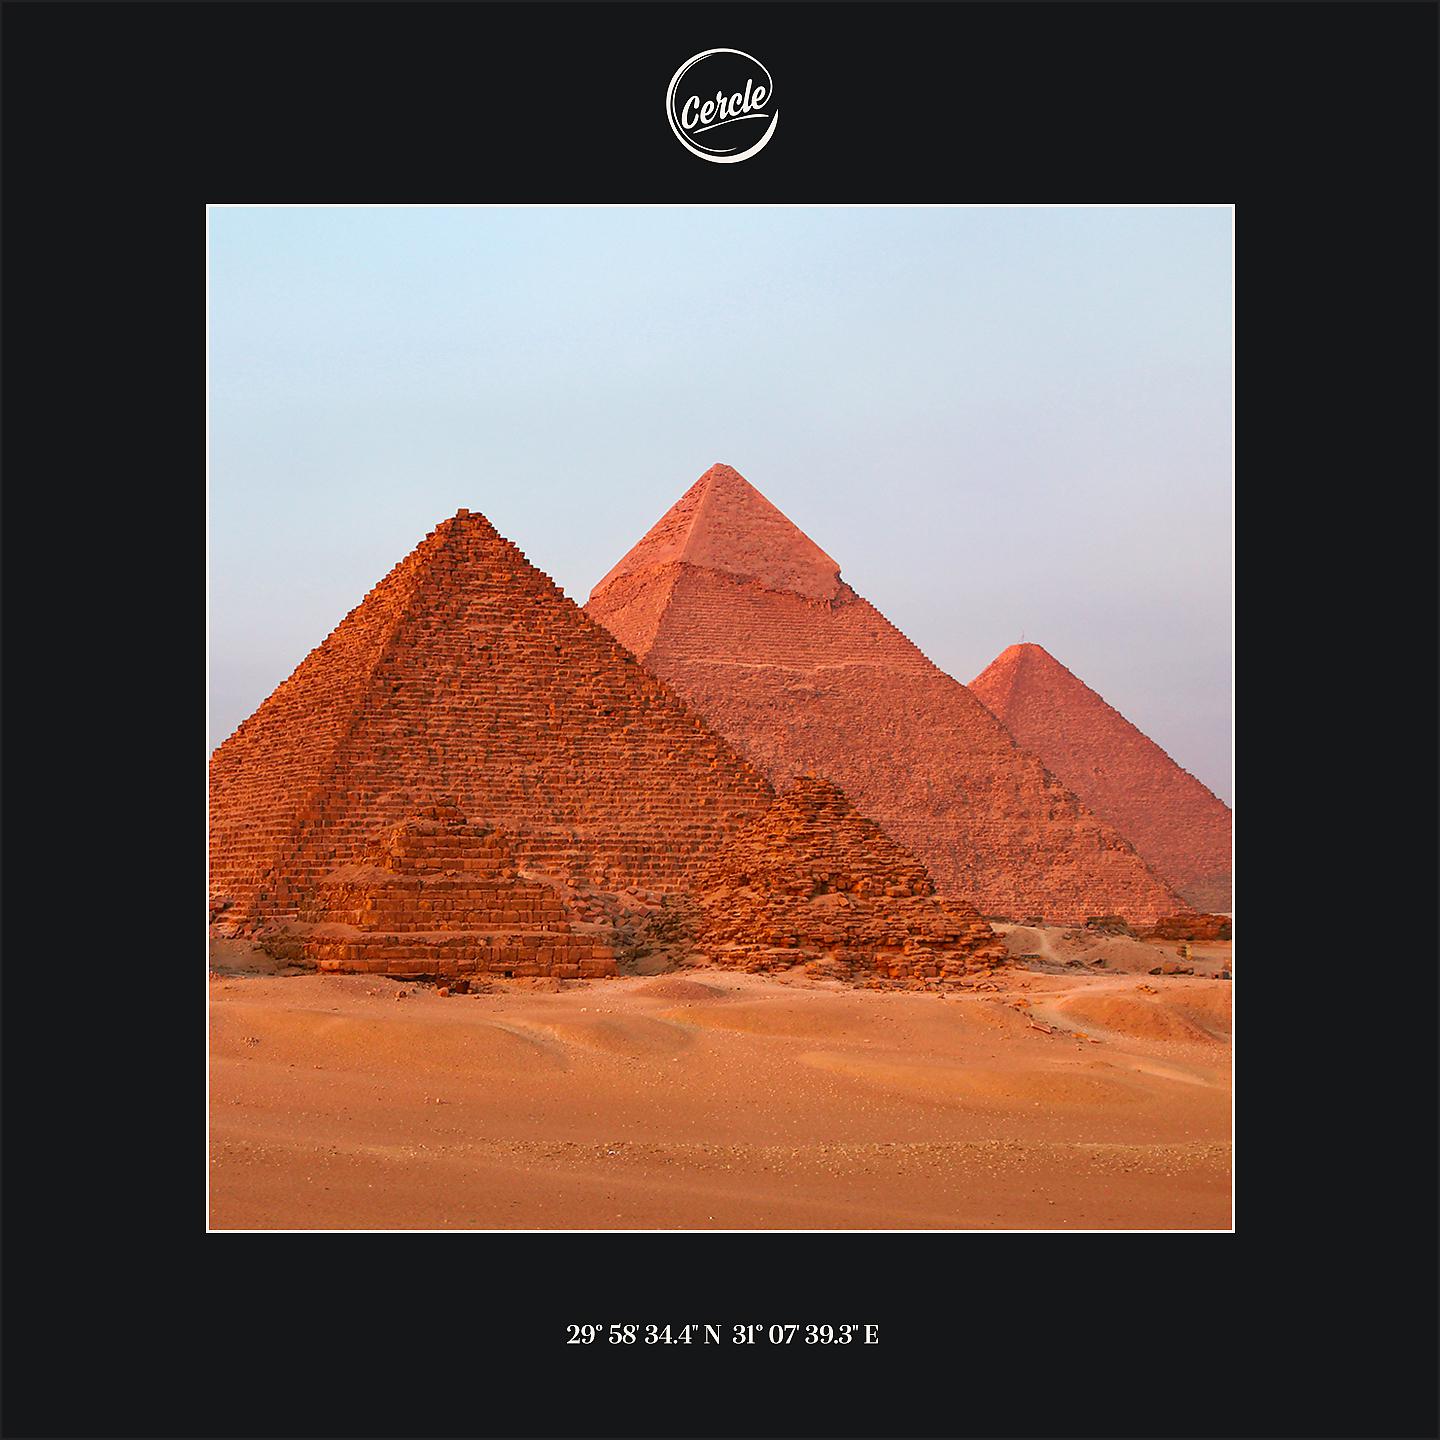 Постер альбома Giza